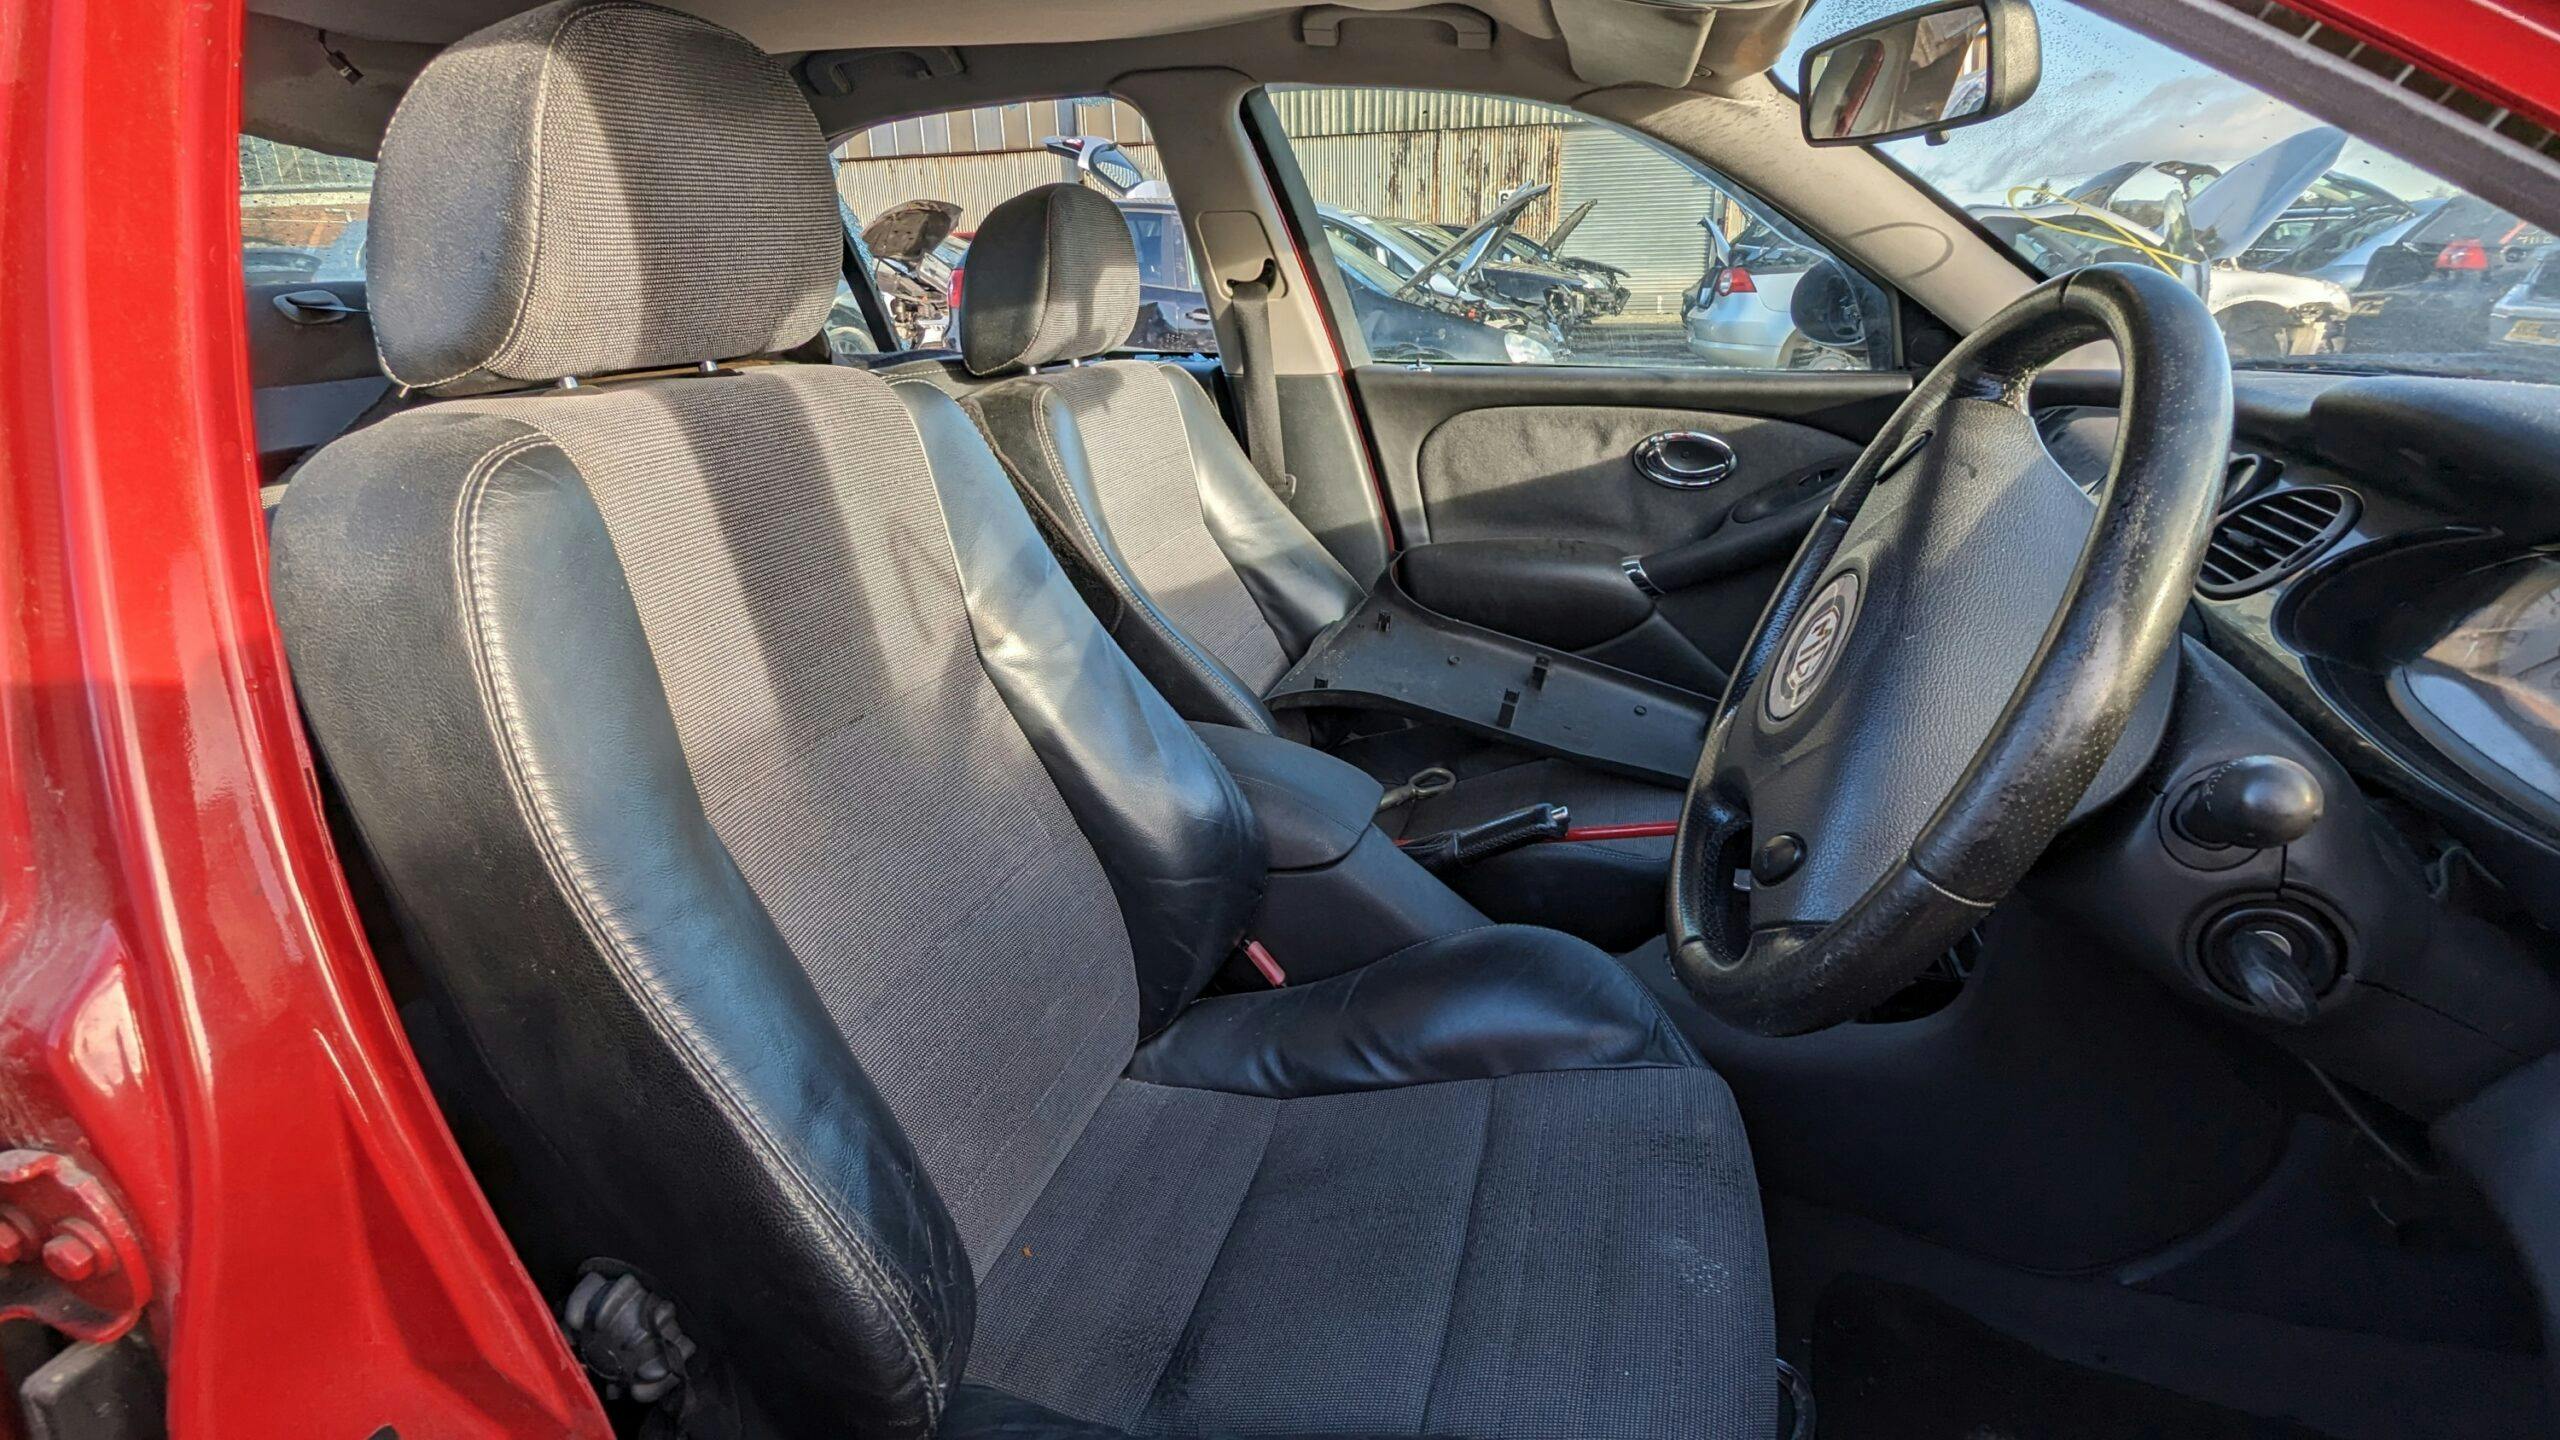 2005 MG ZT 190 interior seats